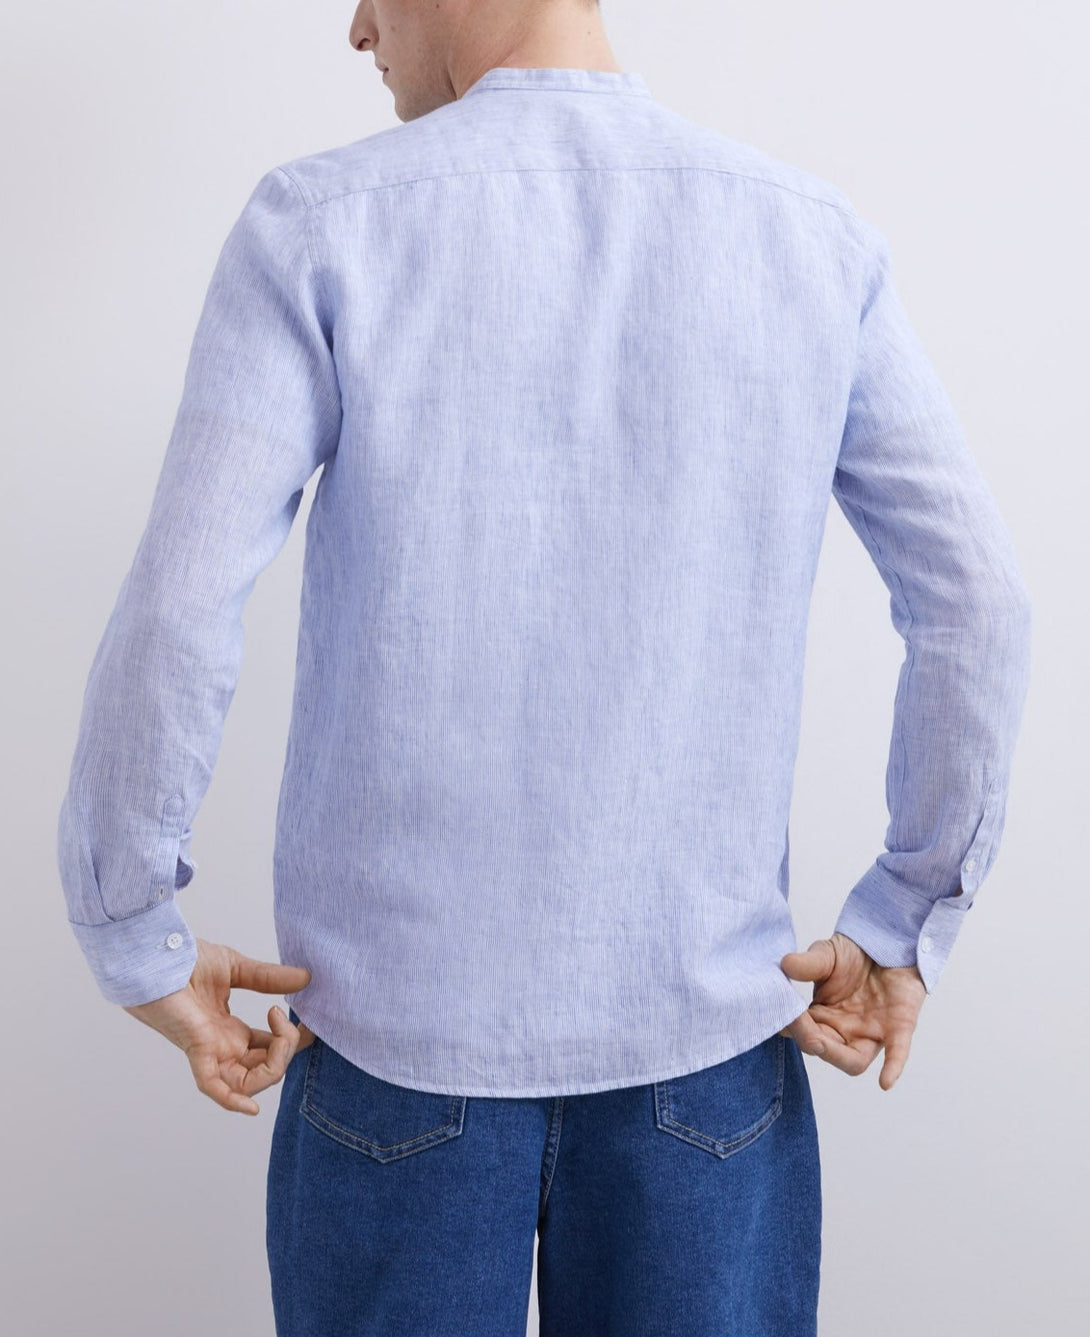 Men Shirt | White/Sky Blue Striped Shirt With Mao Collar In Linen by Spanish designer Adolfo Dominguez